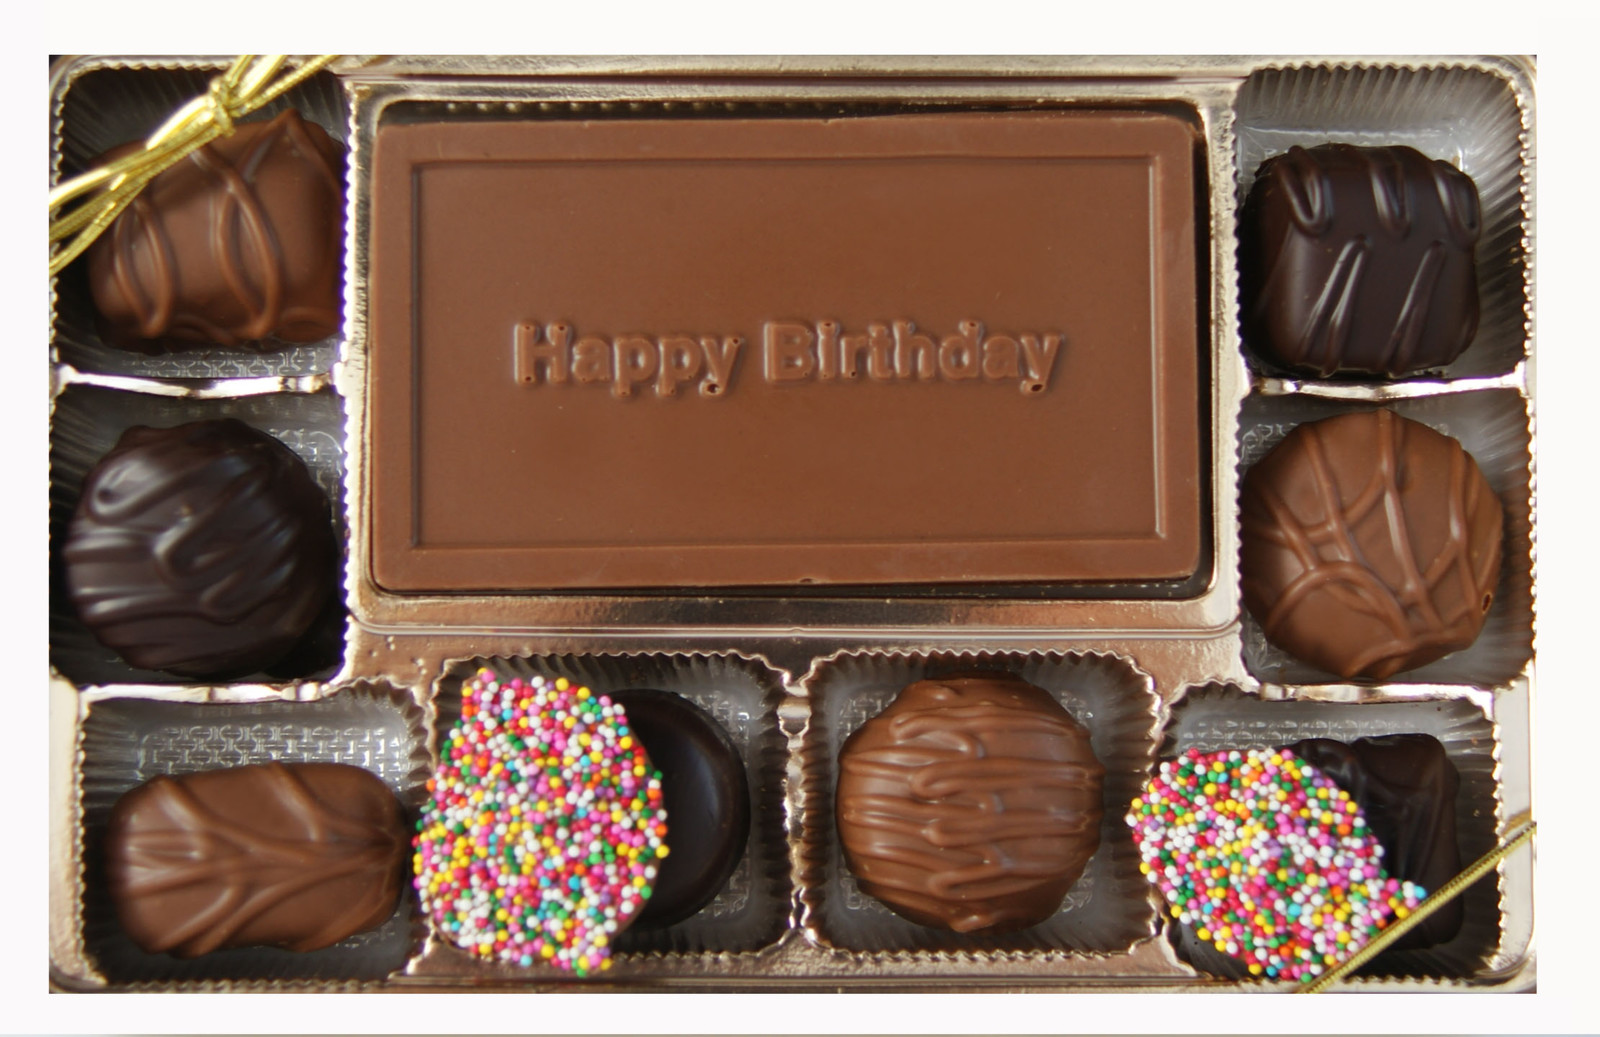 Amp dark chocolate assortment with happy birthday card